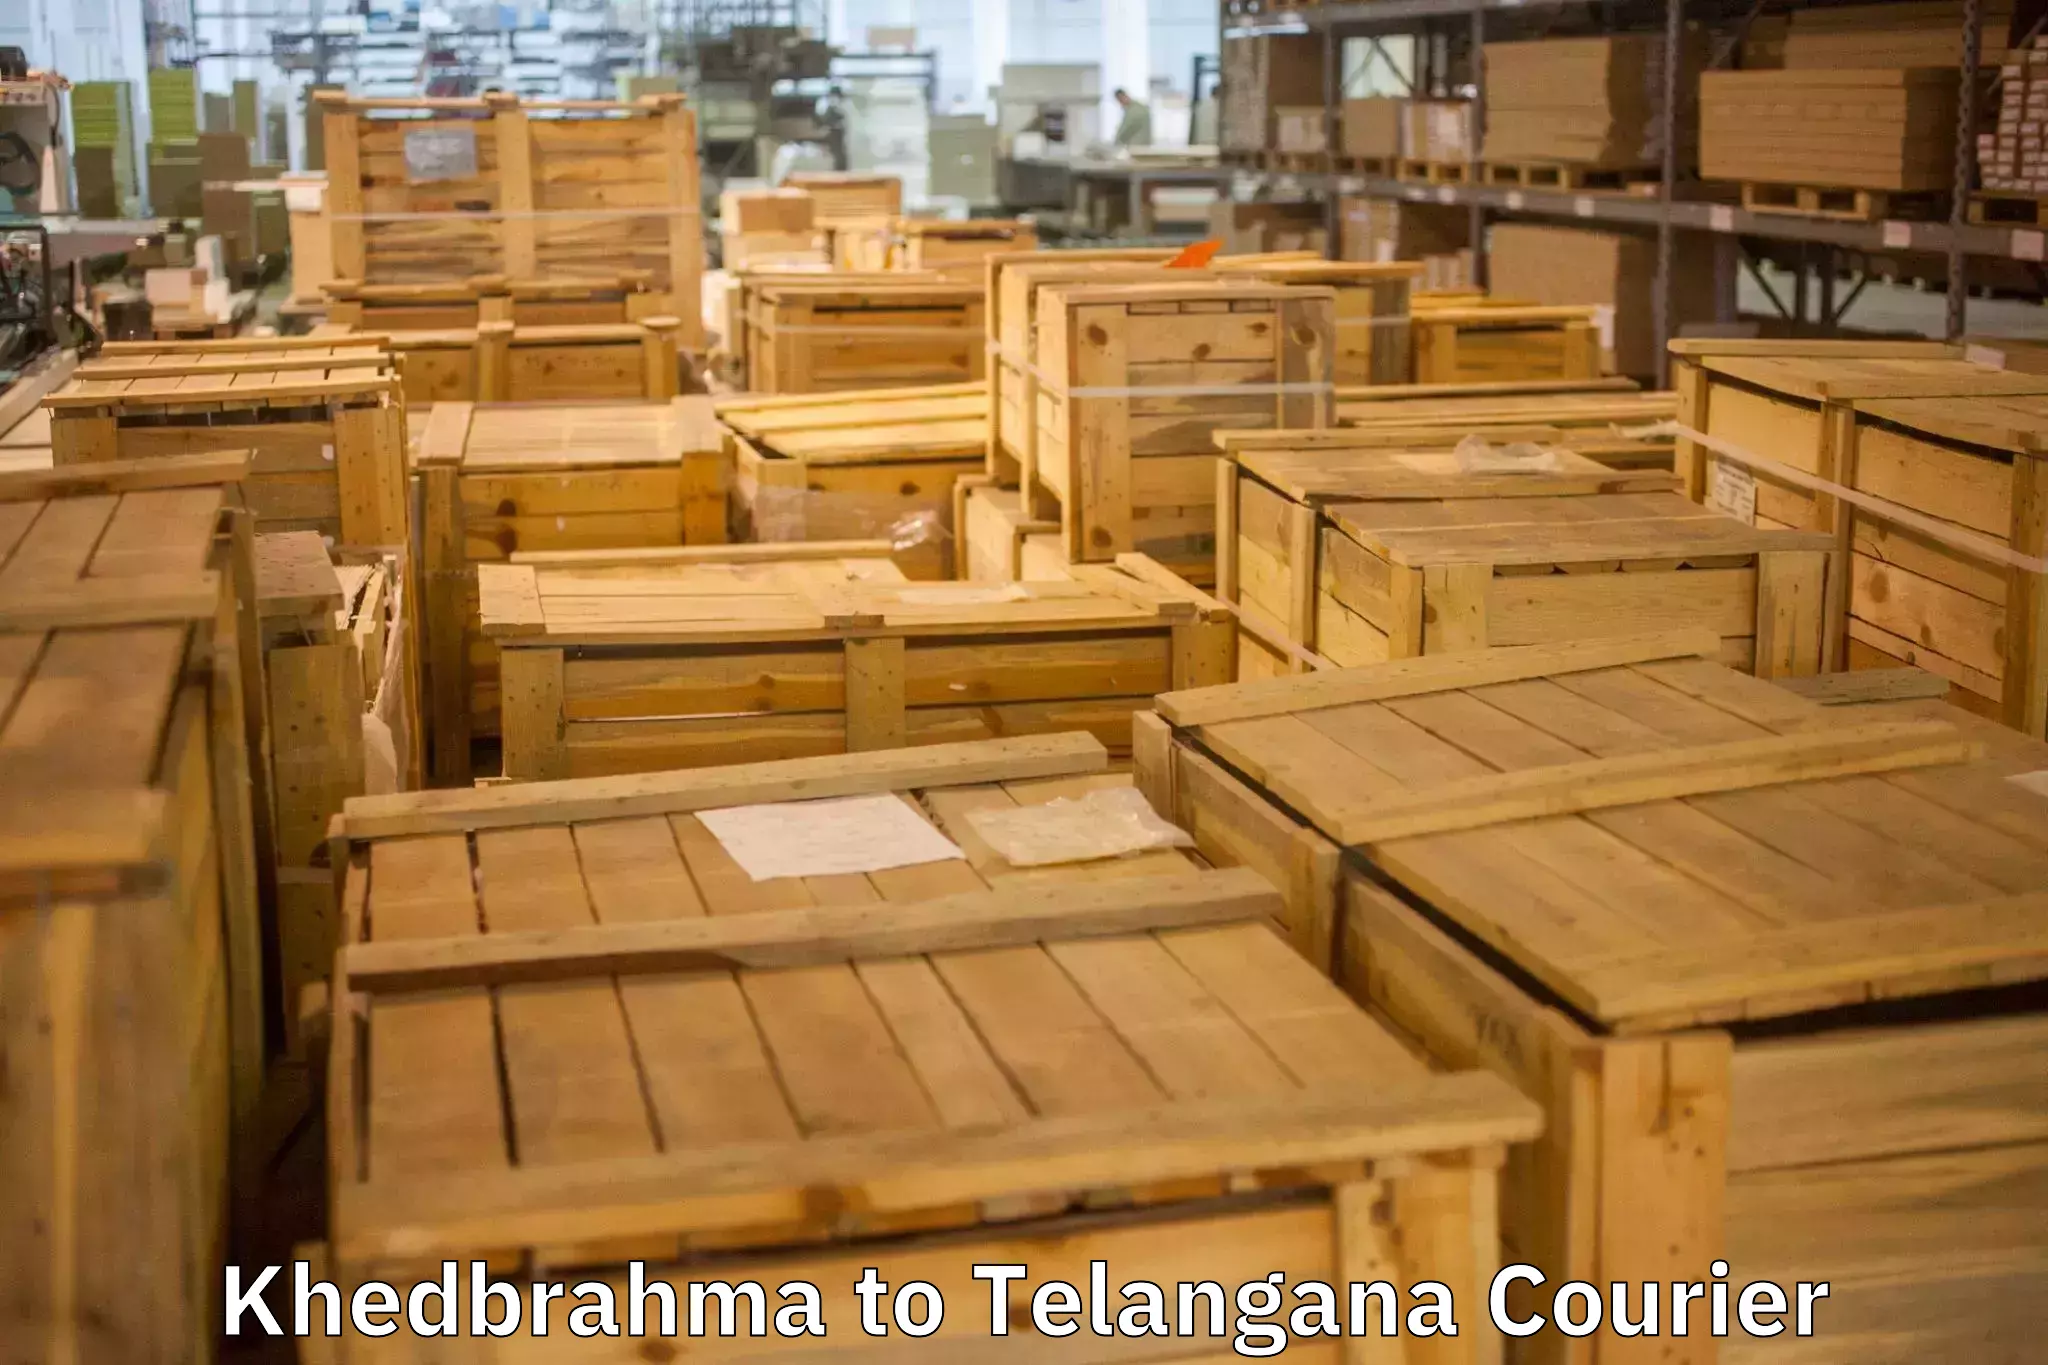 Full-service movers in Khedbrahma to Telangana